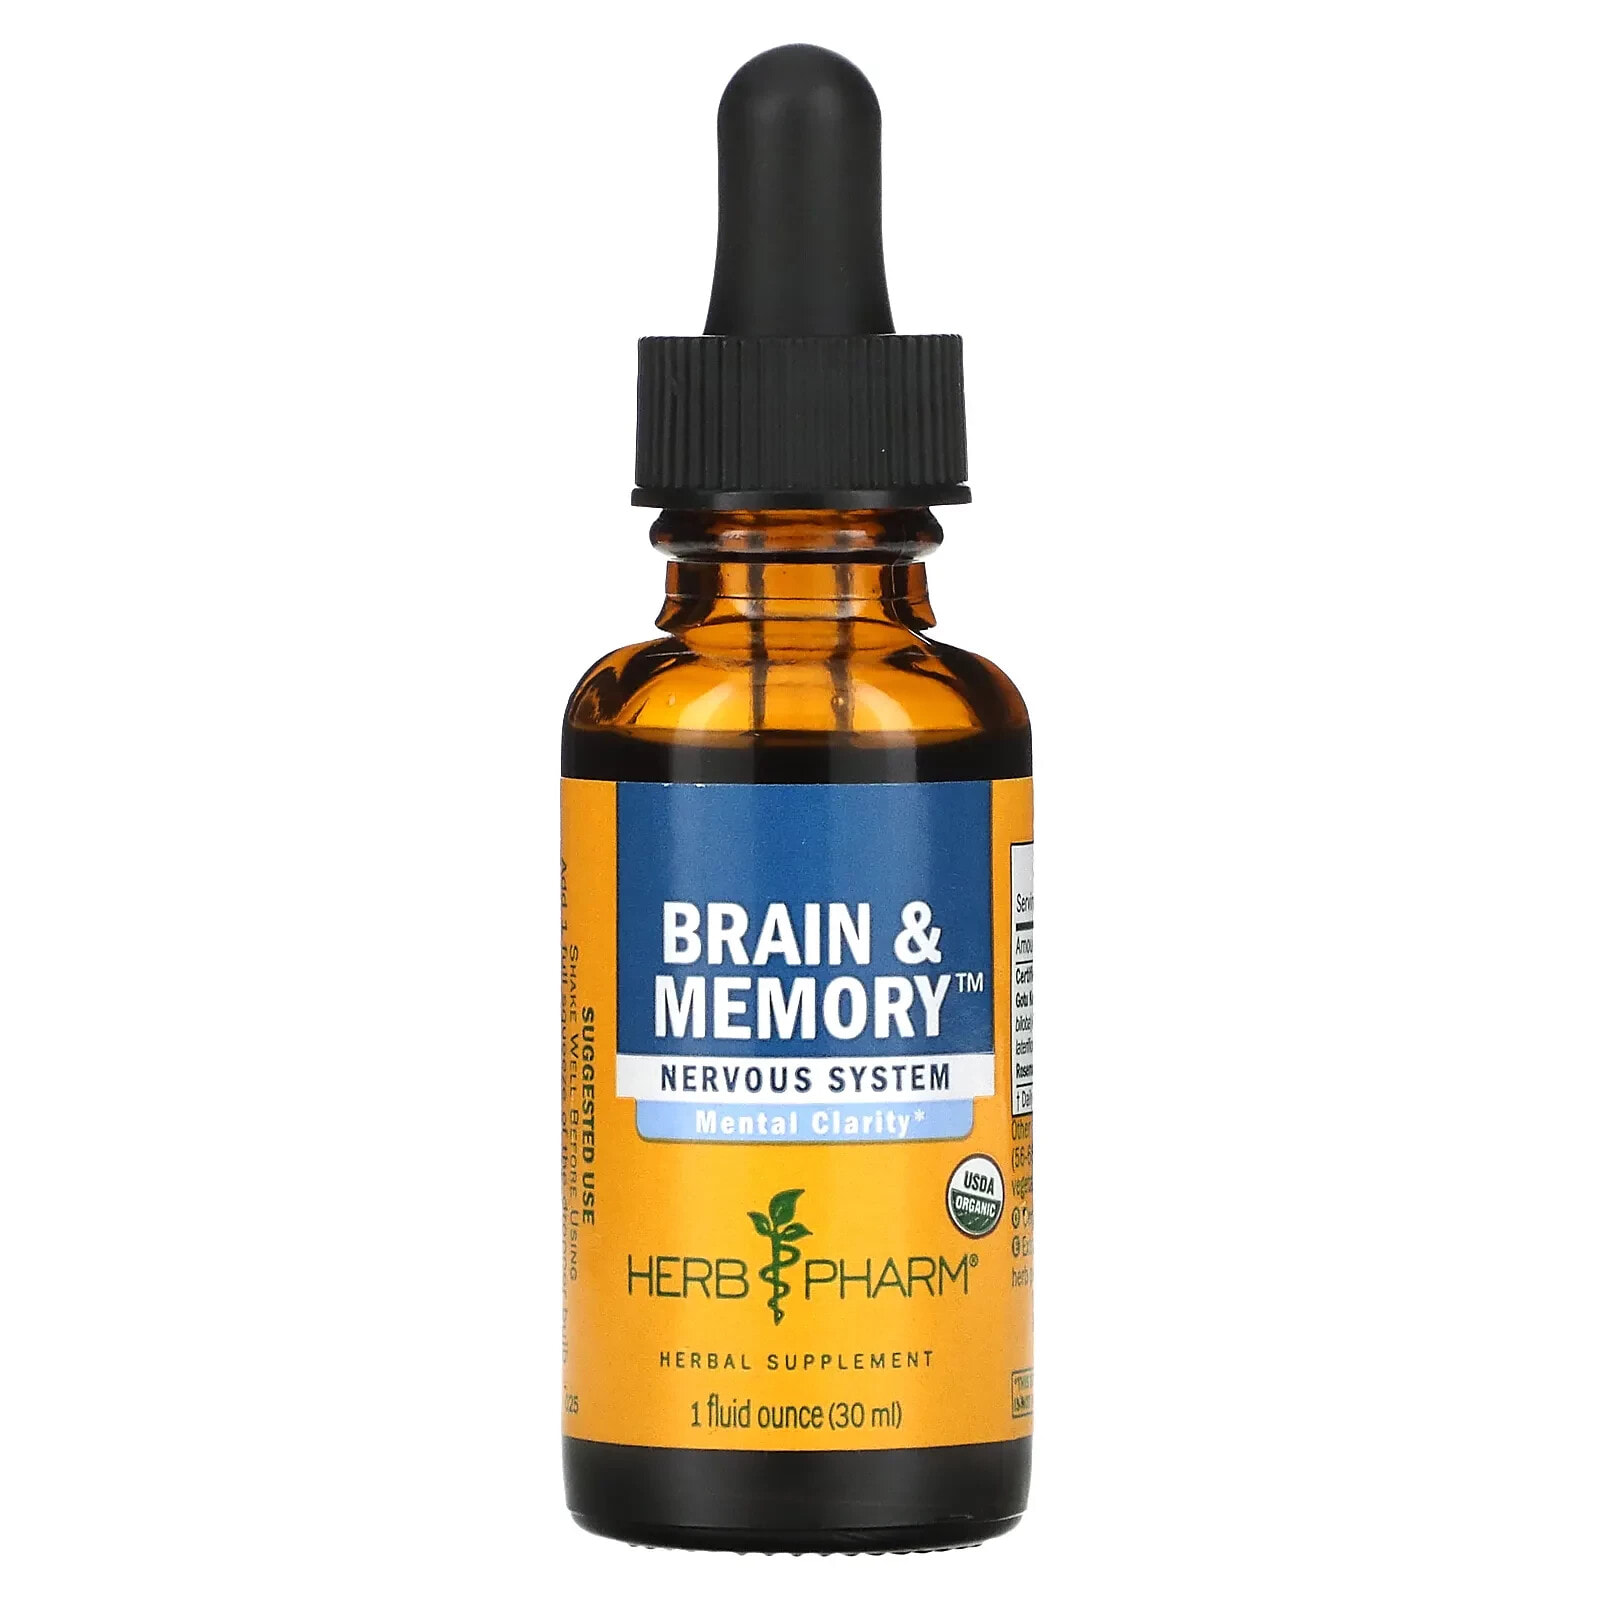 Brain & Memory, Nervous System, 1 fl oz (30 ml)